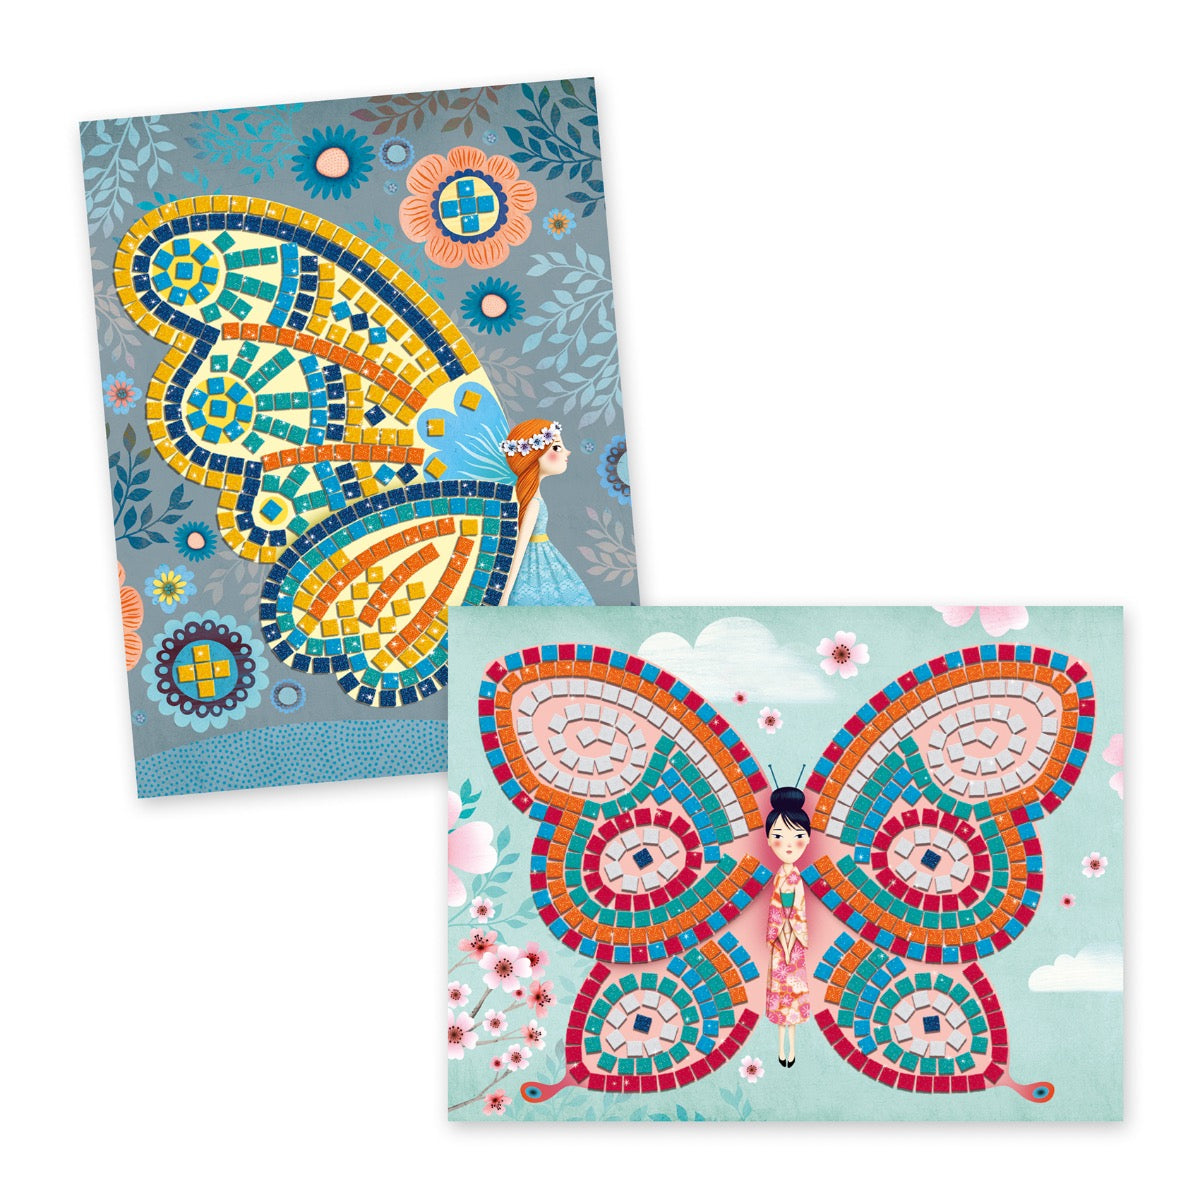 Djeco Mosaics Butterflies